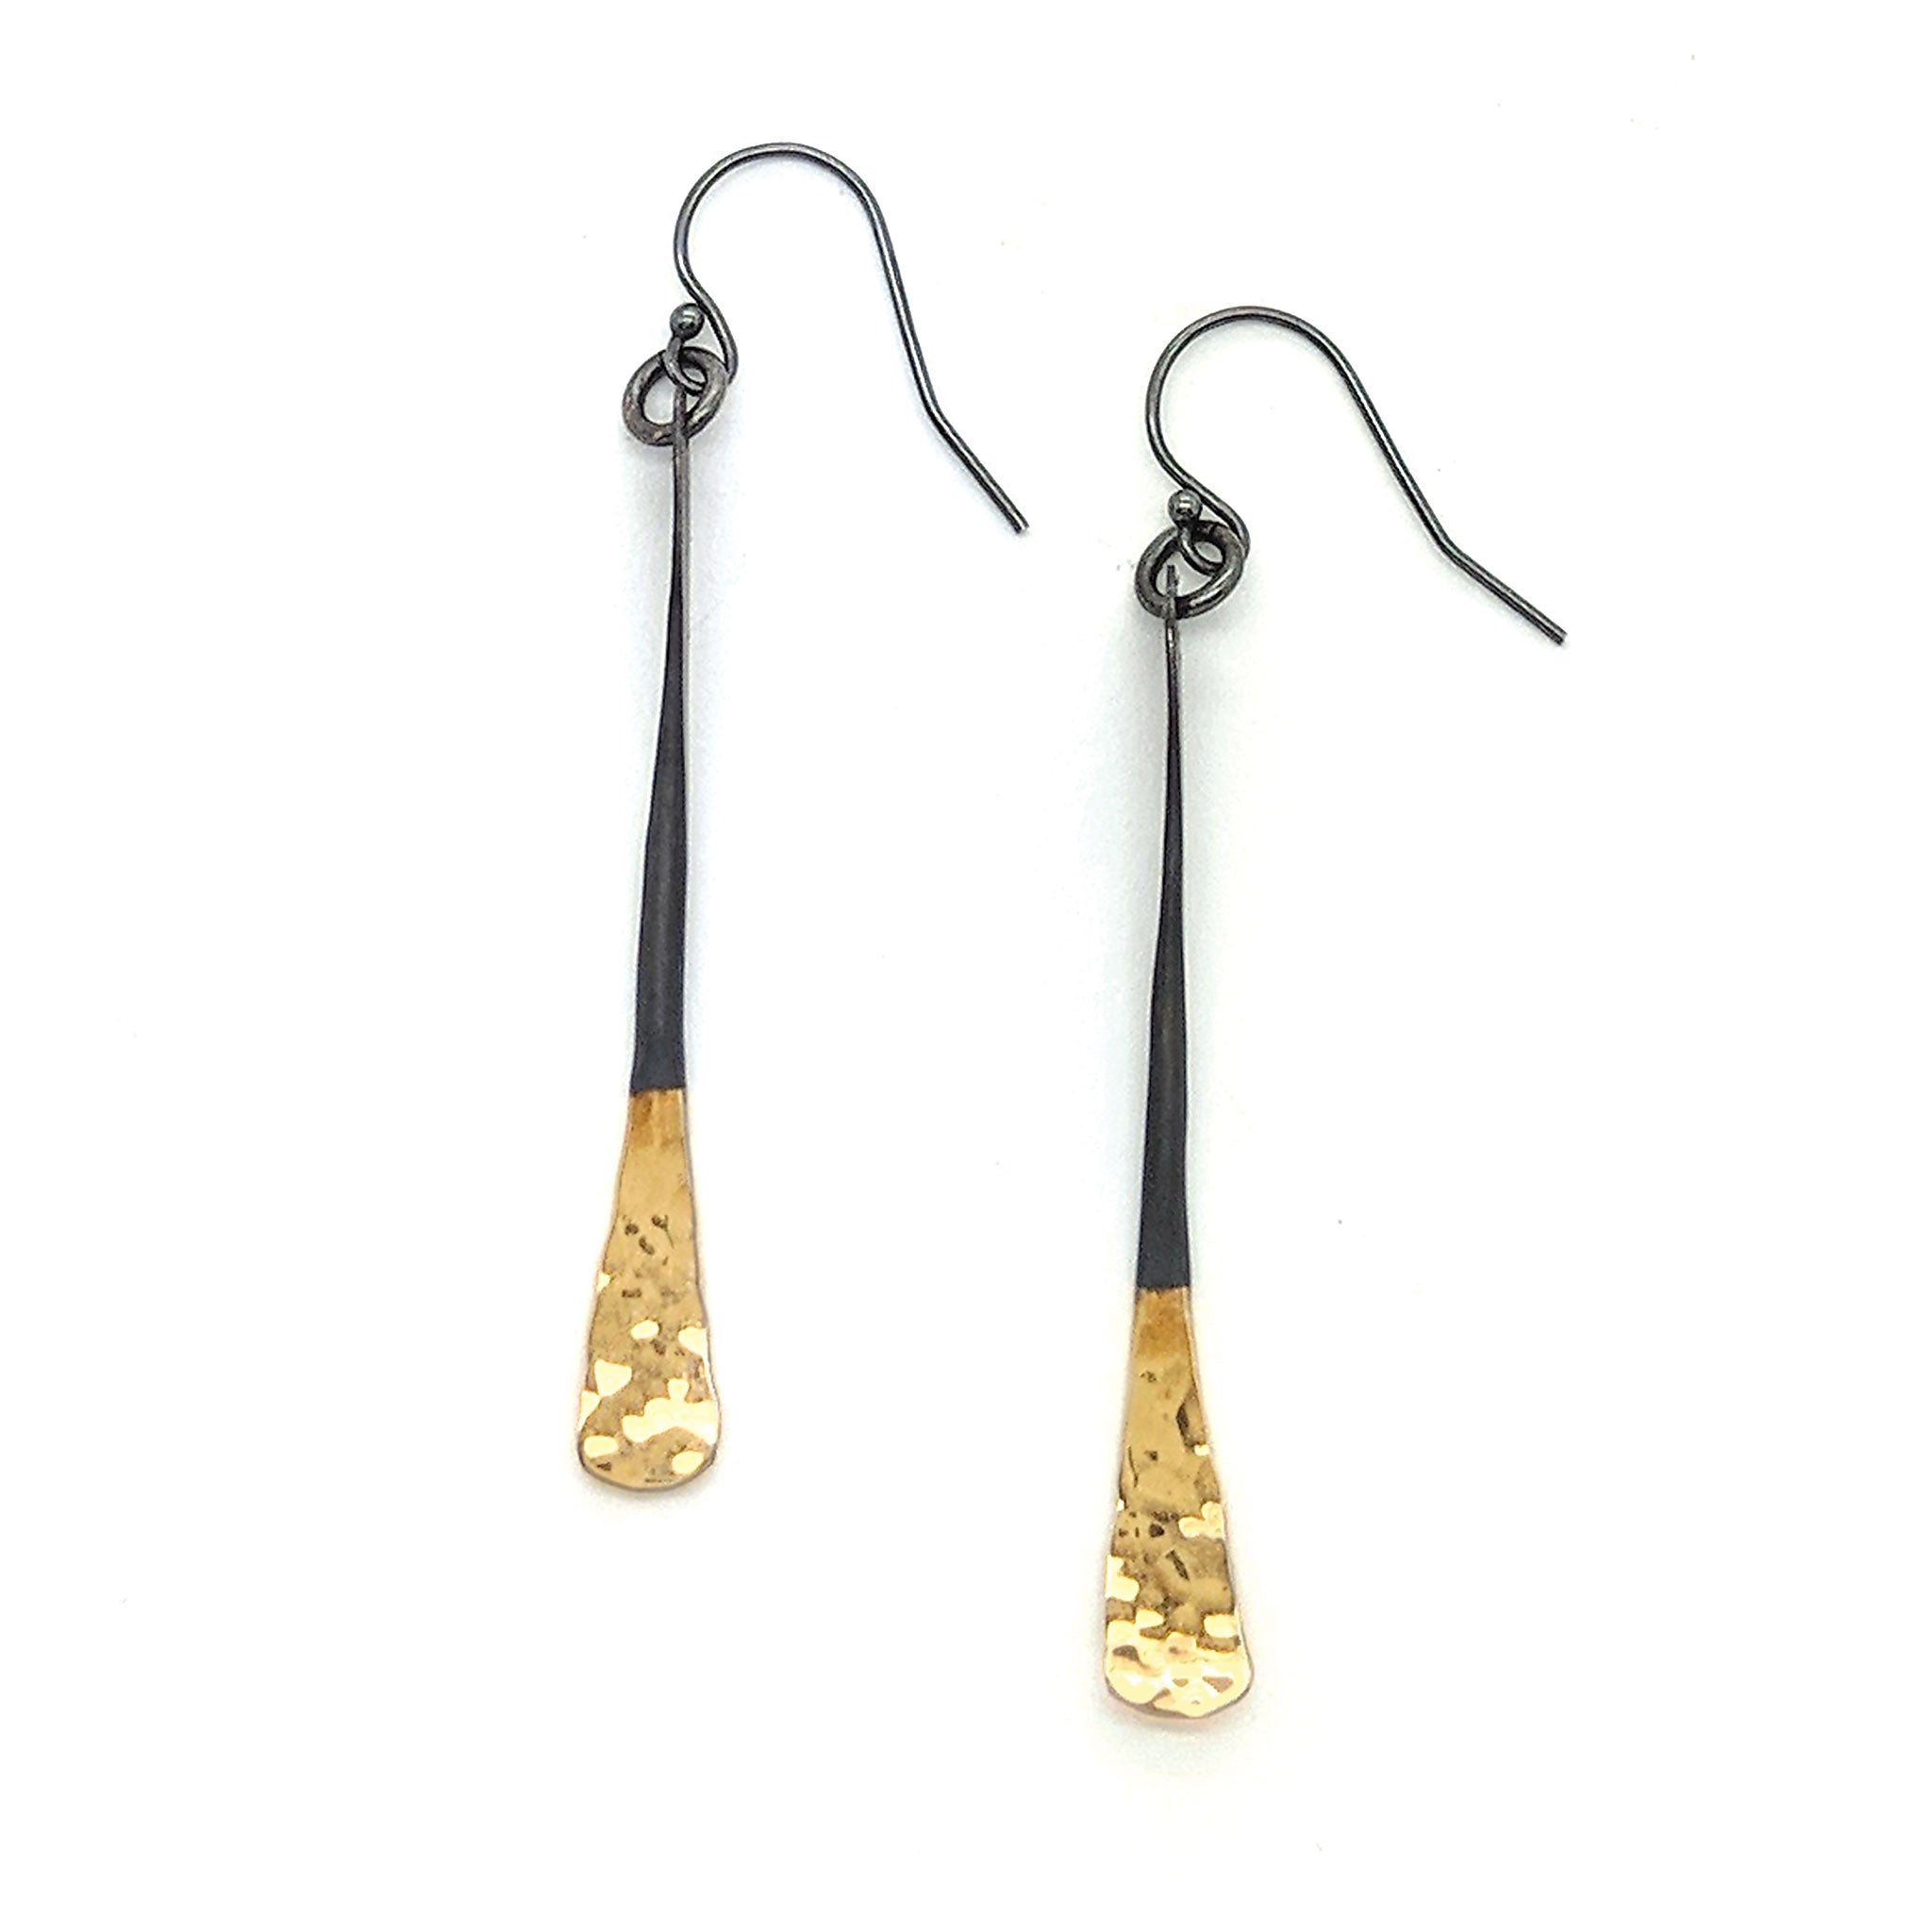 Chain link earrings gold earrings dangle • Extra long earrings • Hoop -  Hand Stamped Trinkets